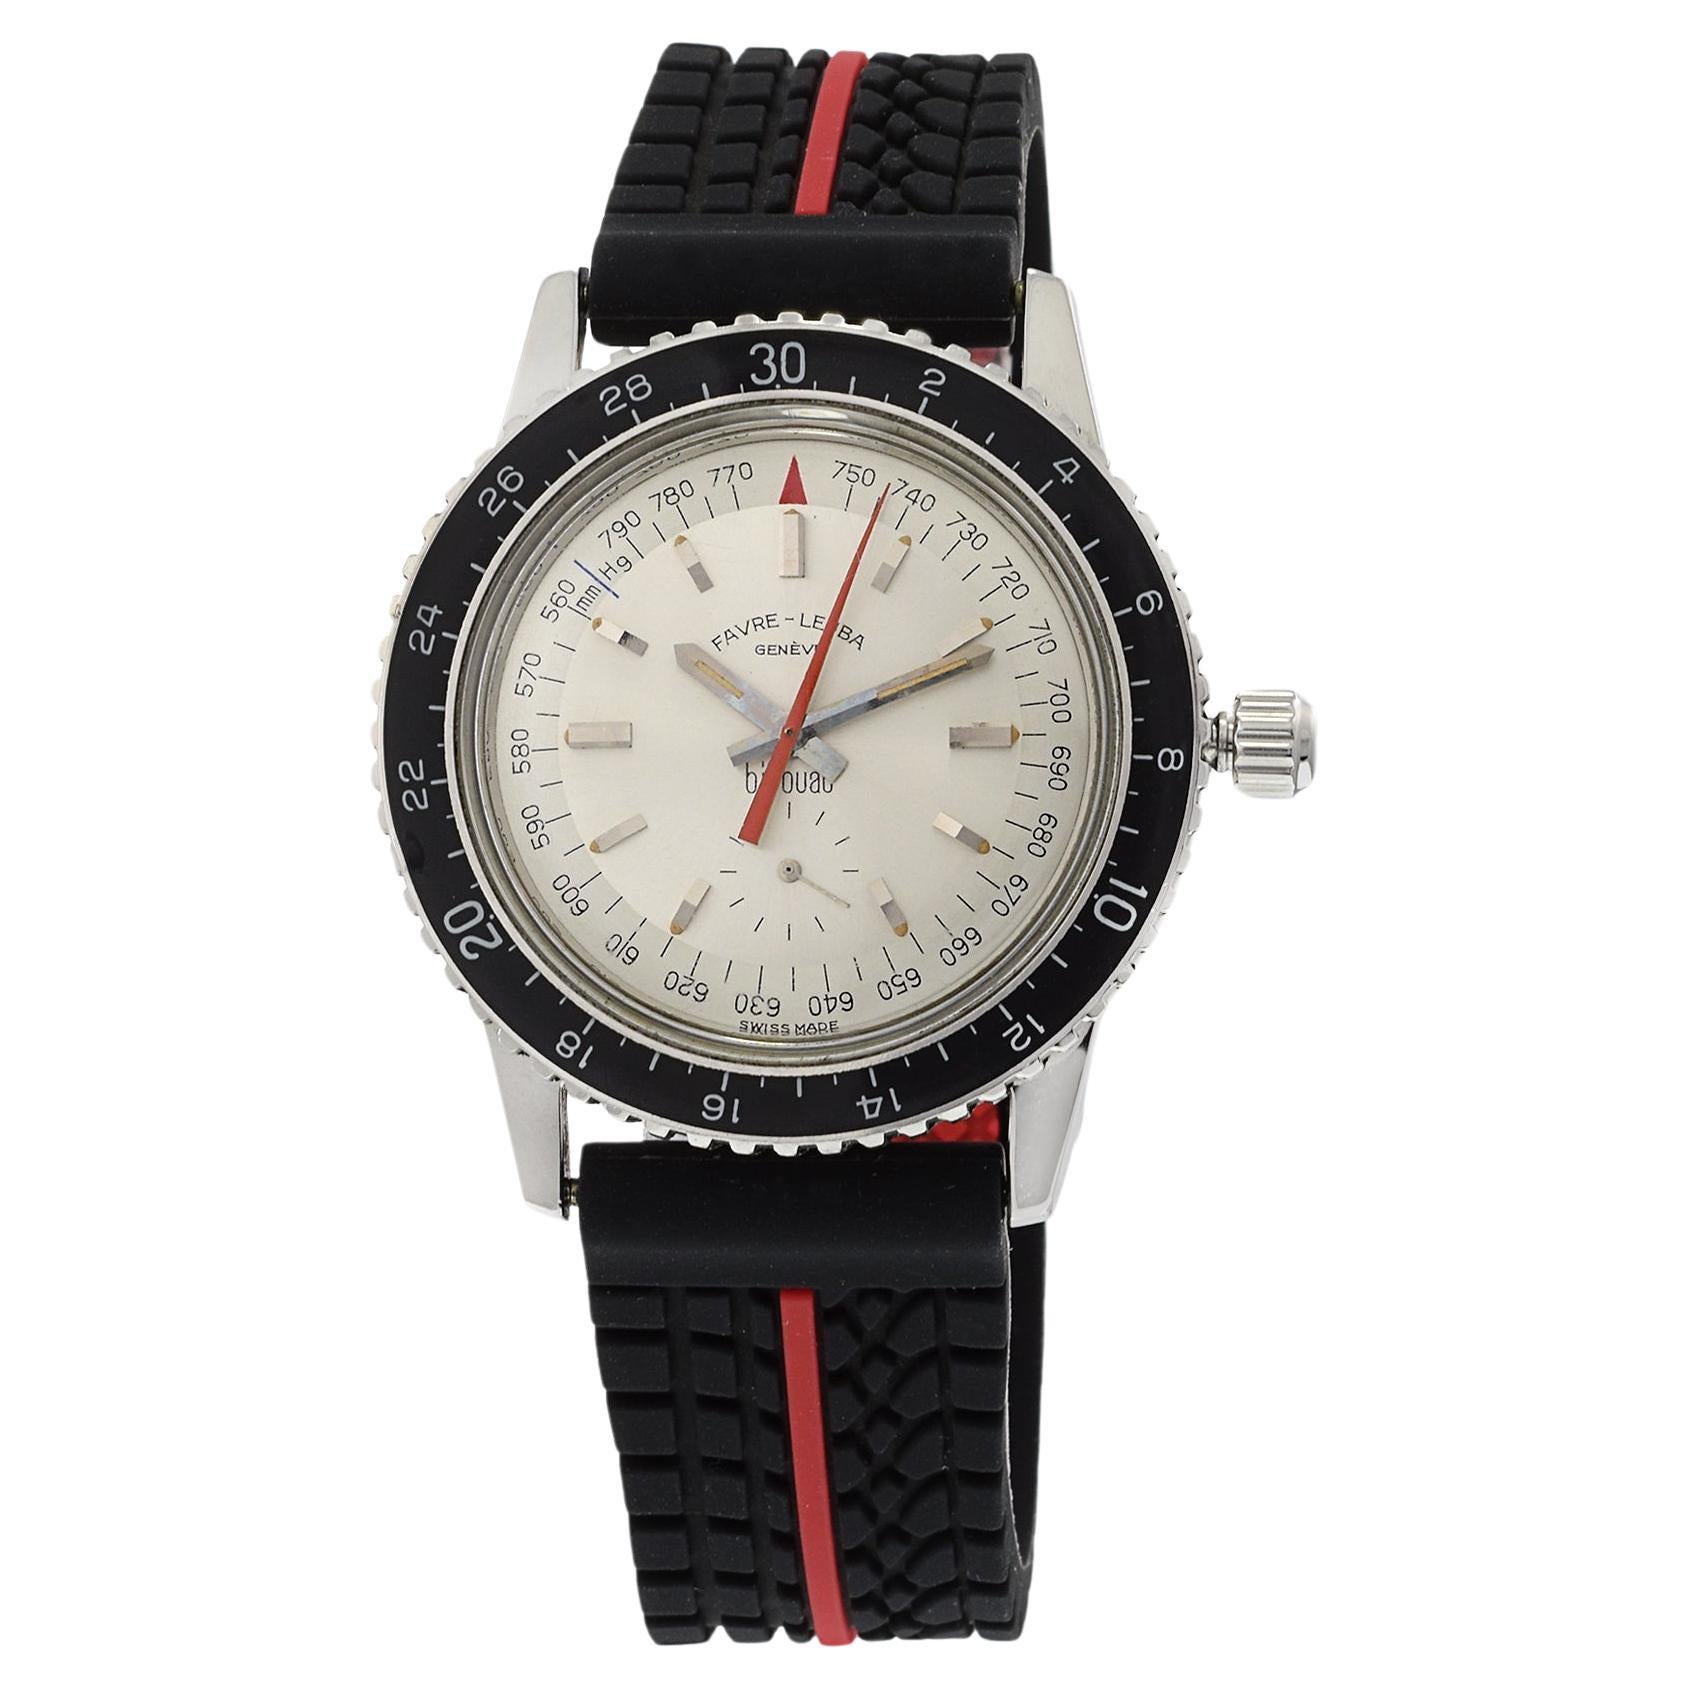 Favre-Leuba Bivouac Reference 53213 Altimeter Barometer Watch For Sale